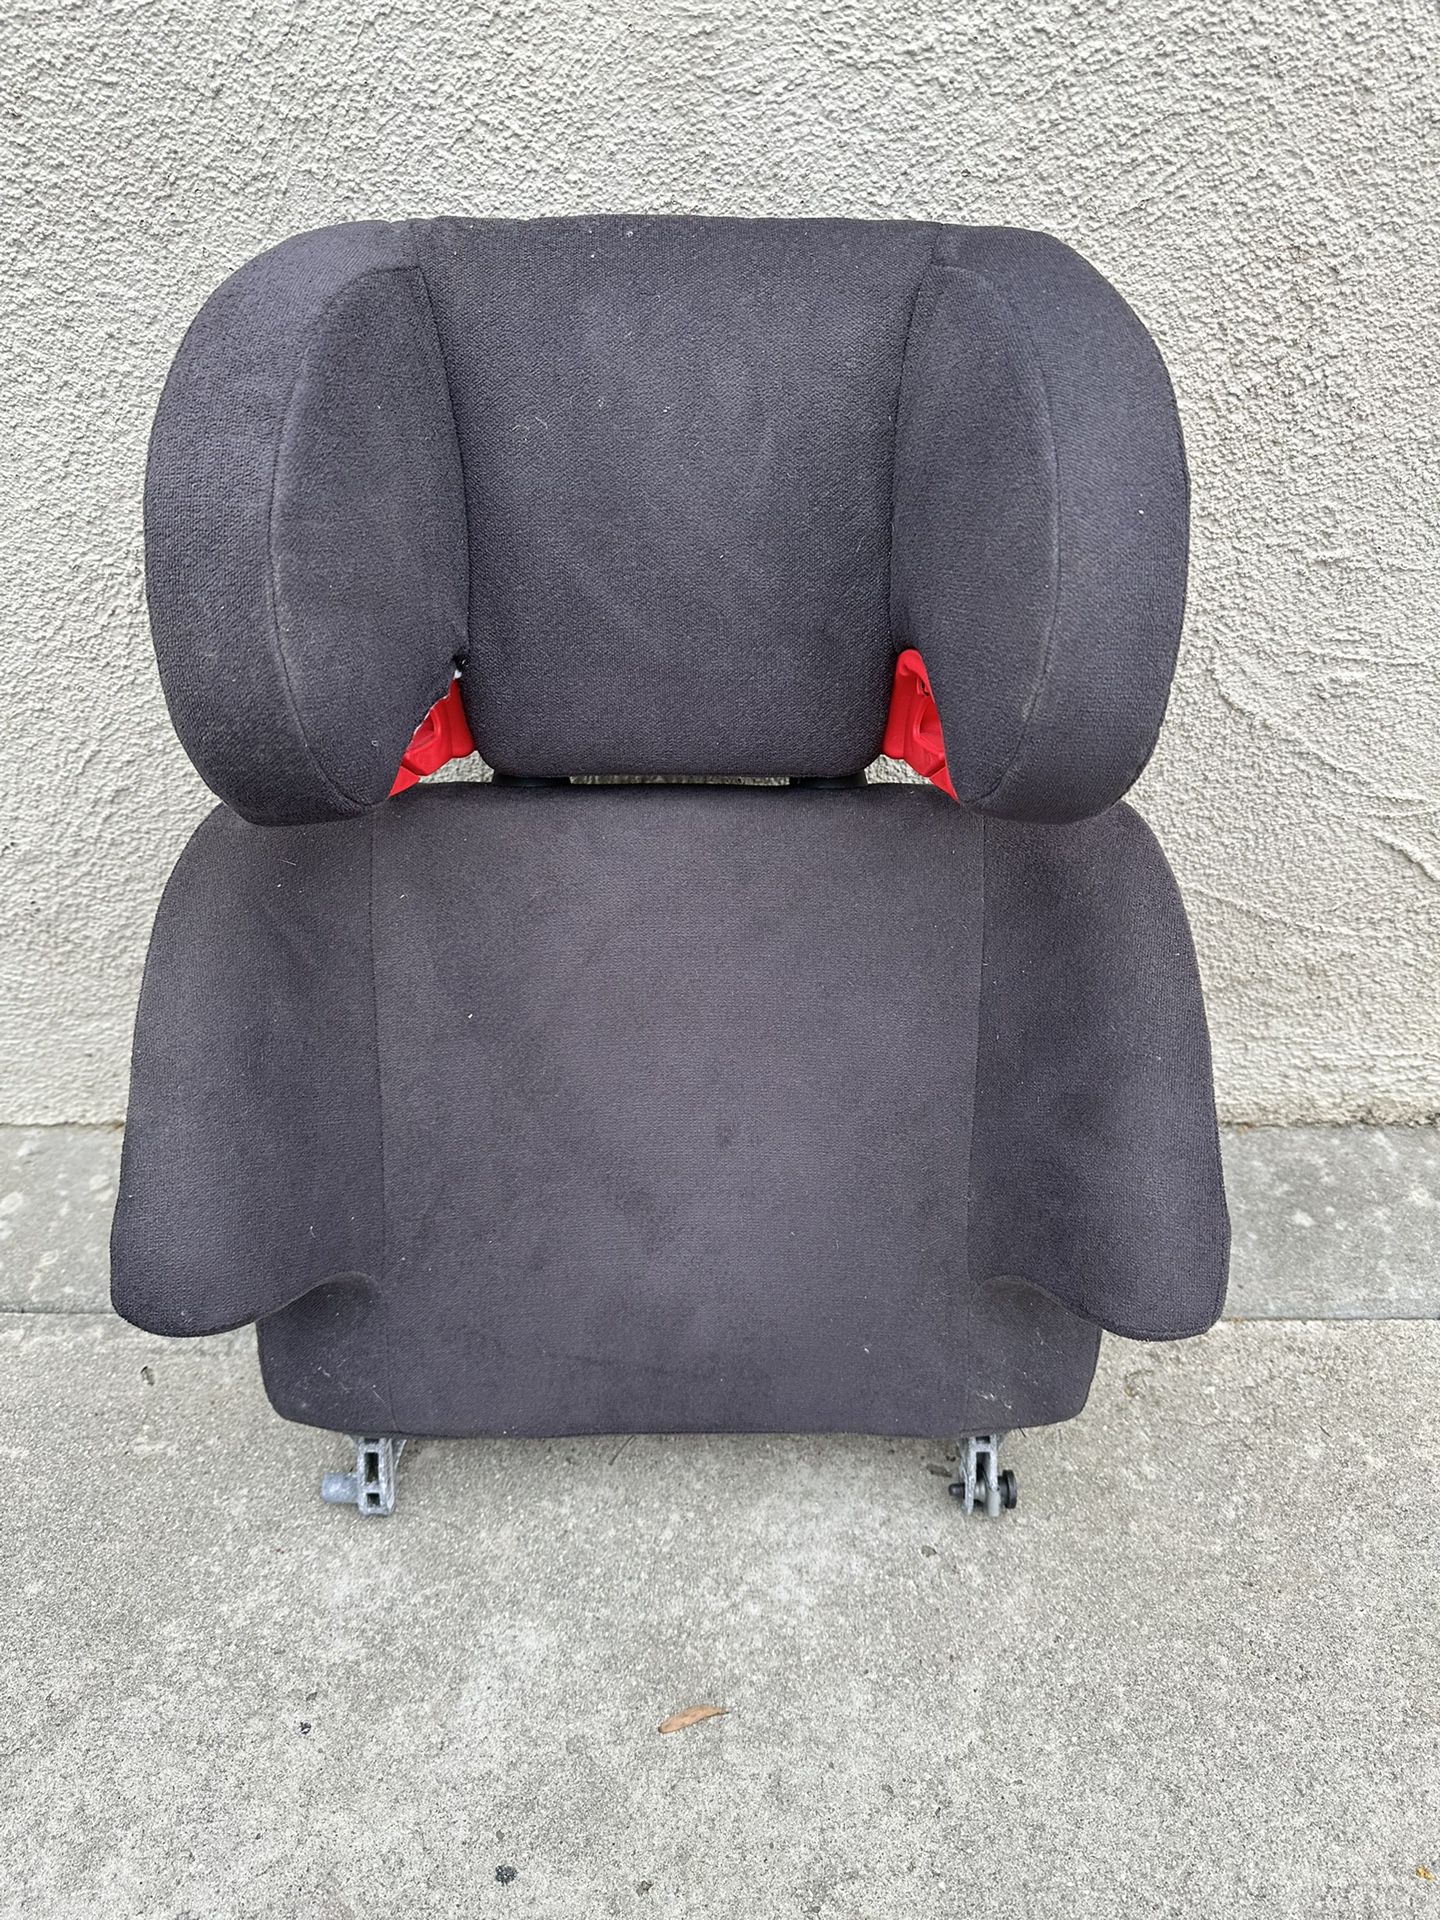 Clek Hi Booster Seat / Just Back Support